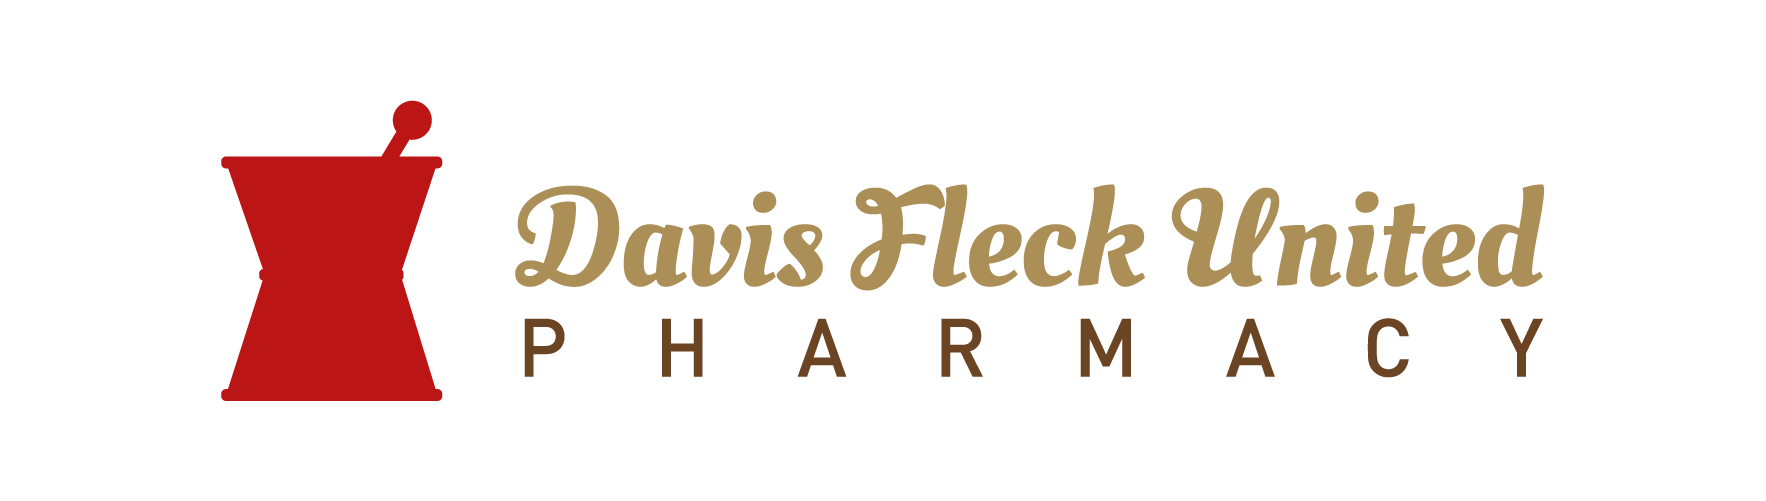 Davis Fleck United Pharmacy